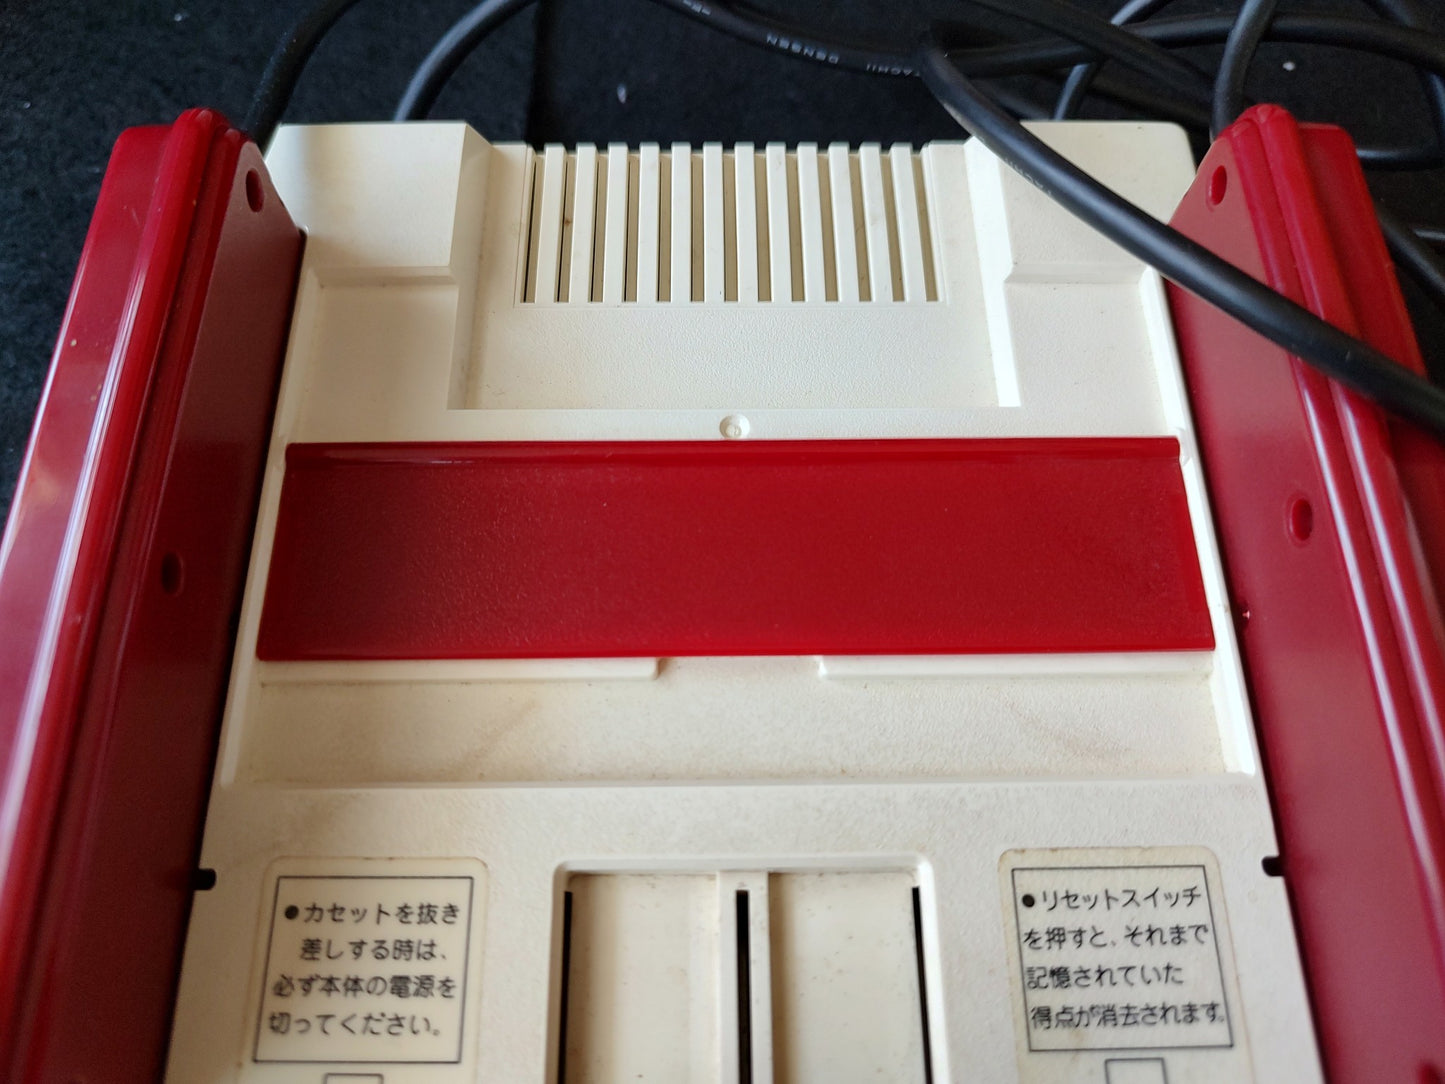 Nintendo Famicom NES HVC-001 Console, PSU, Manual, Flyer, Box set, Working-f0604